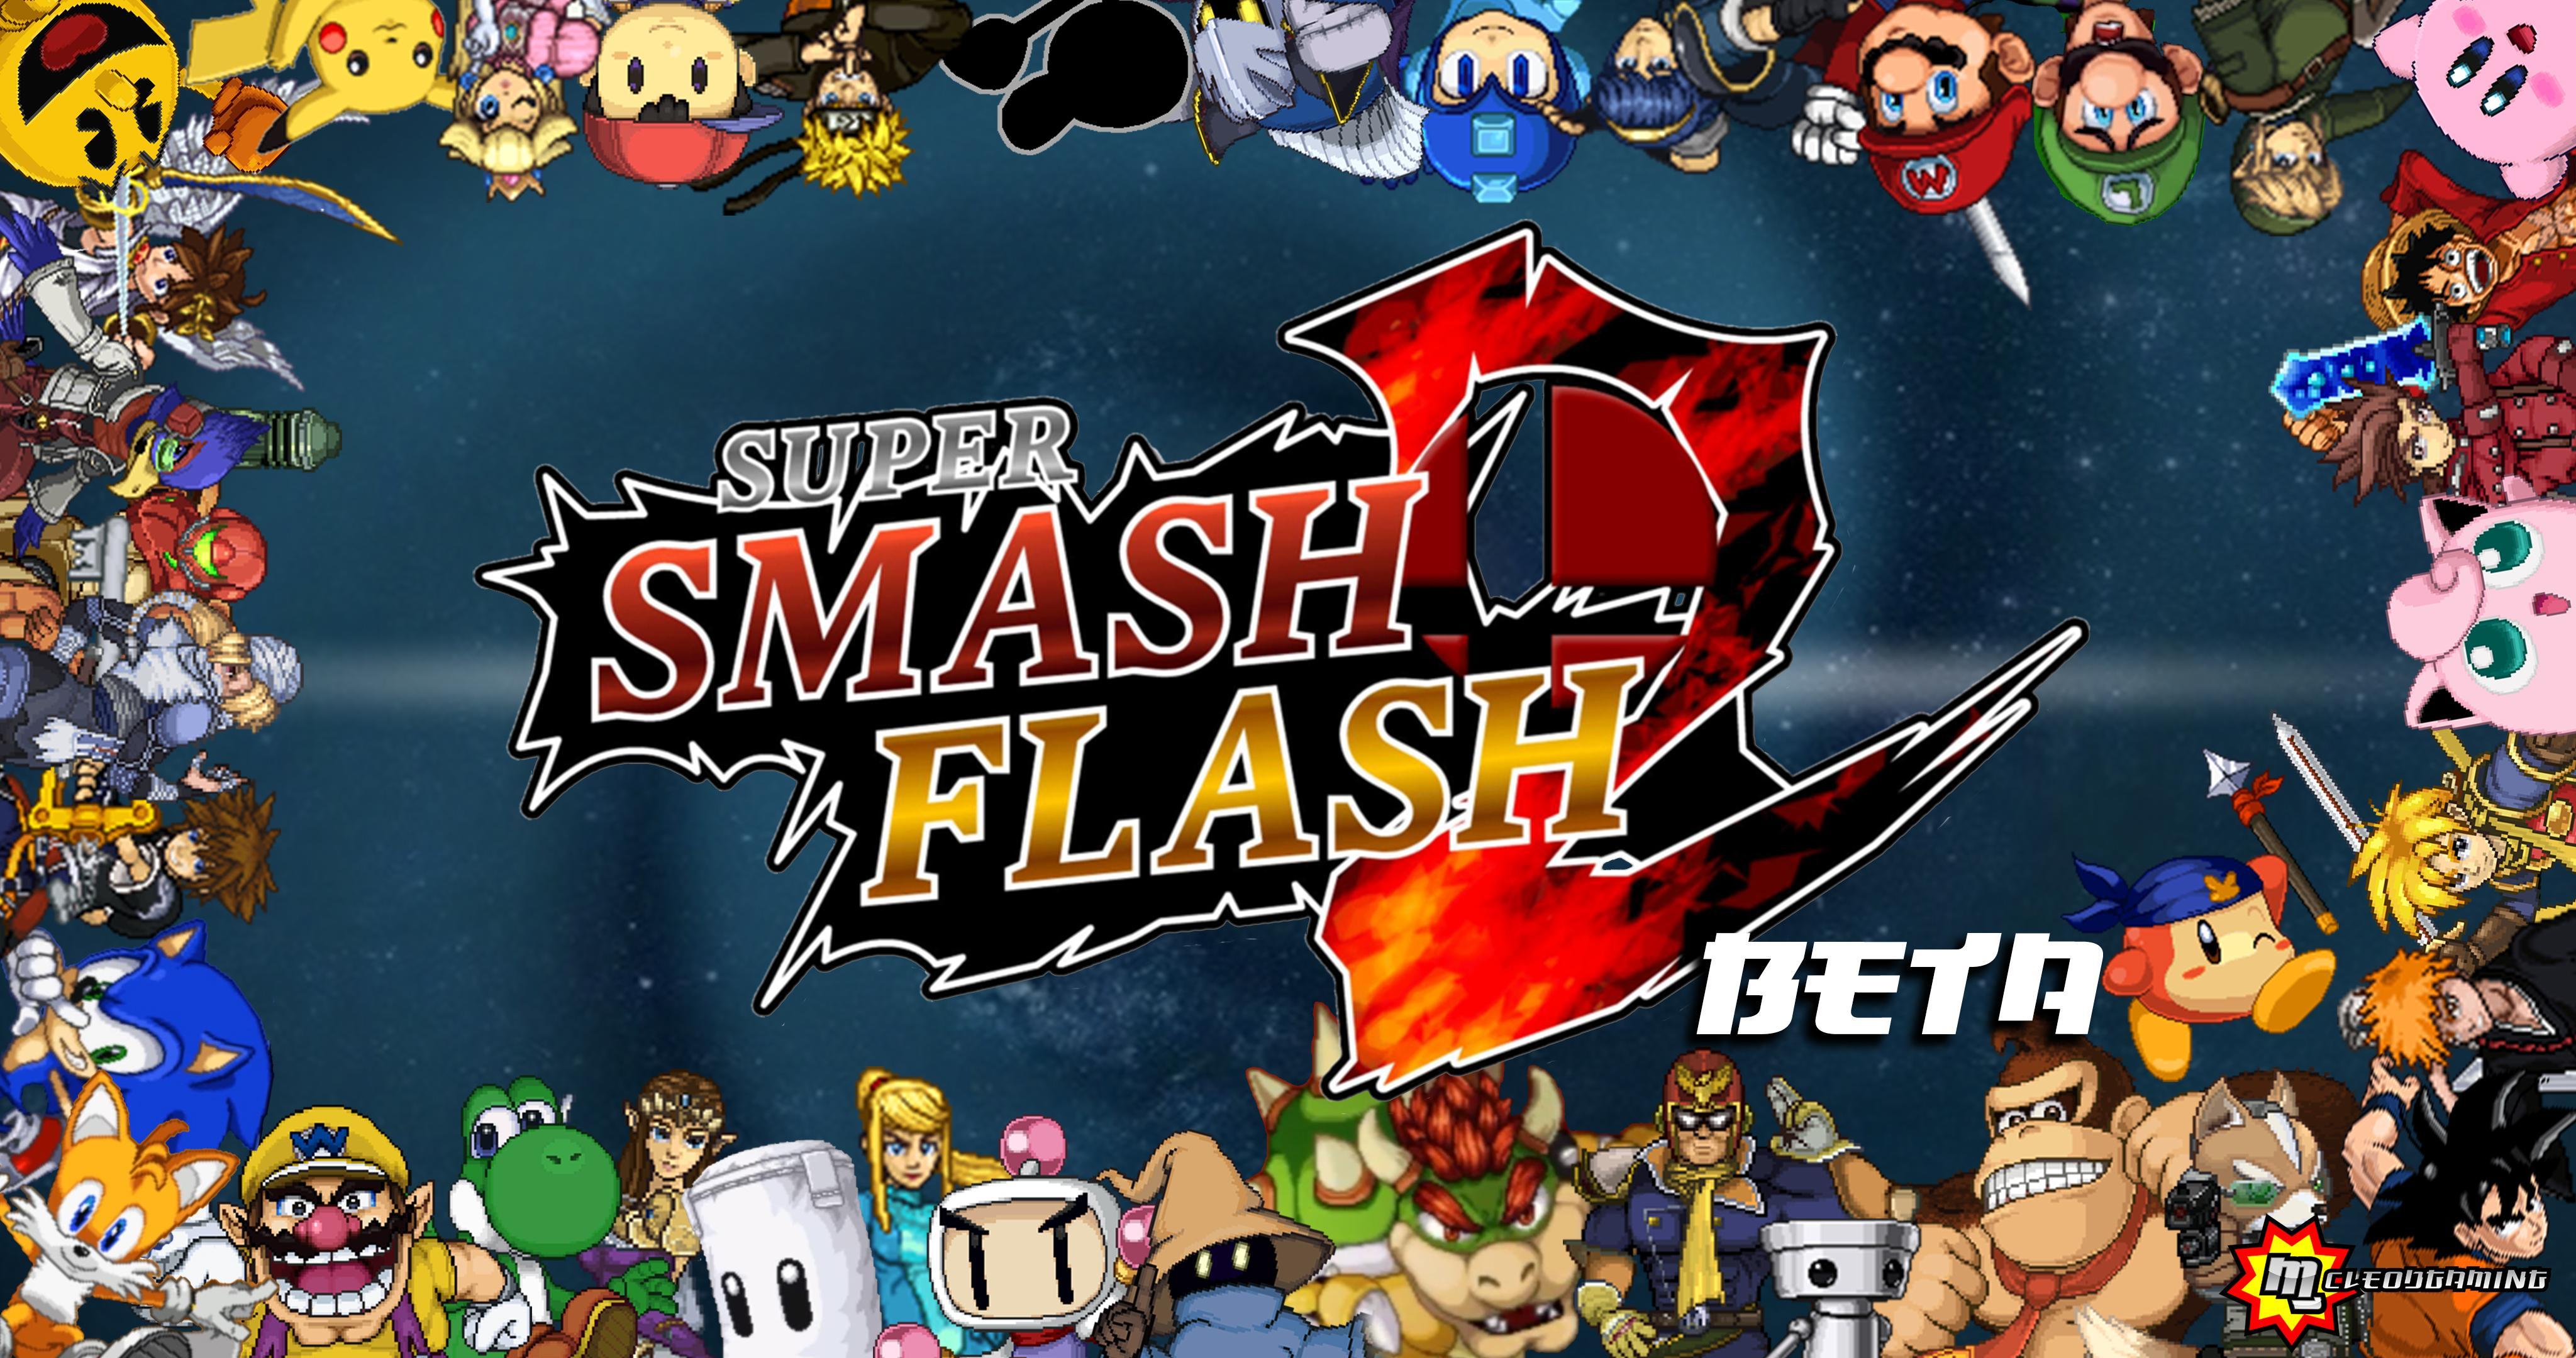 super smash flash 2 beta 1.3.0.1